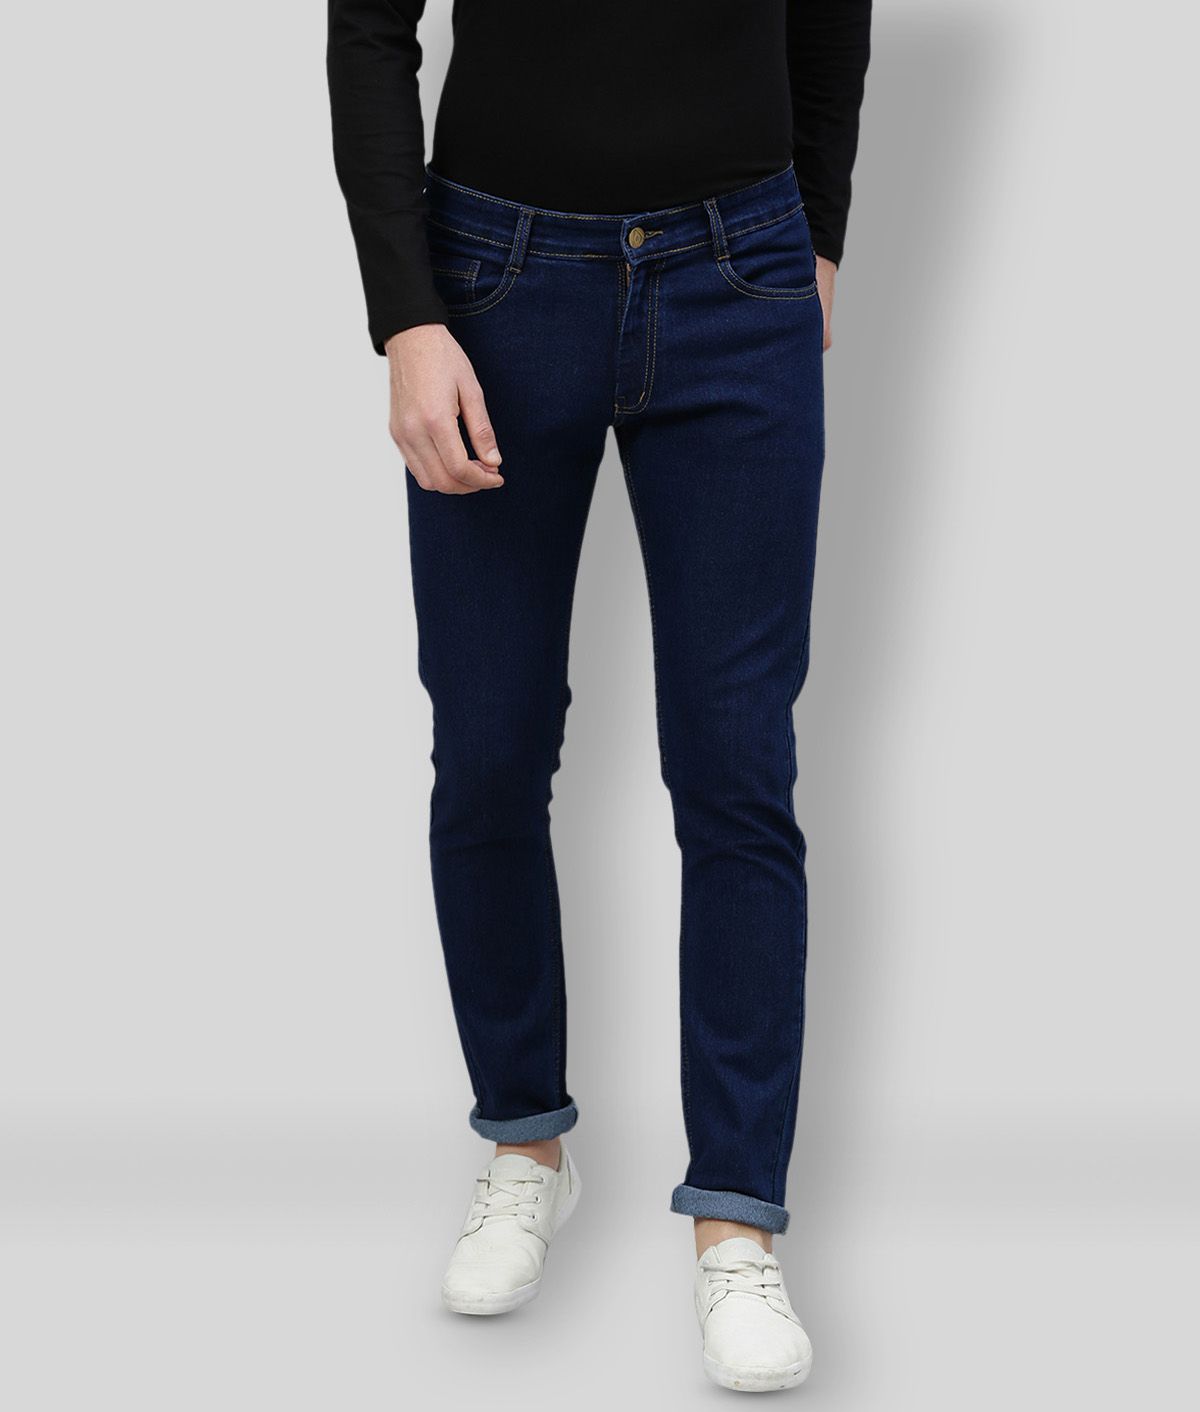 Urbano Fashion - Dark Blue 100% Cotton Slim Fit Men's Jeans ( Pack of 1 )